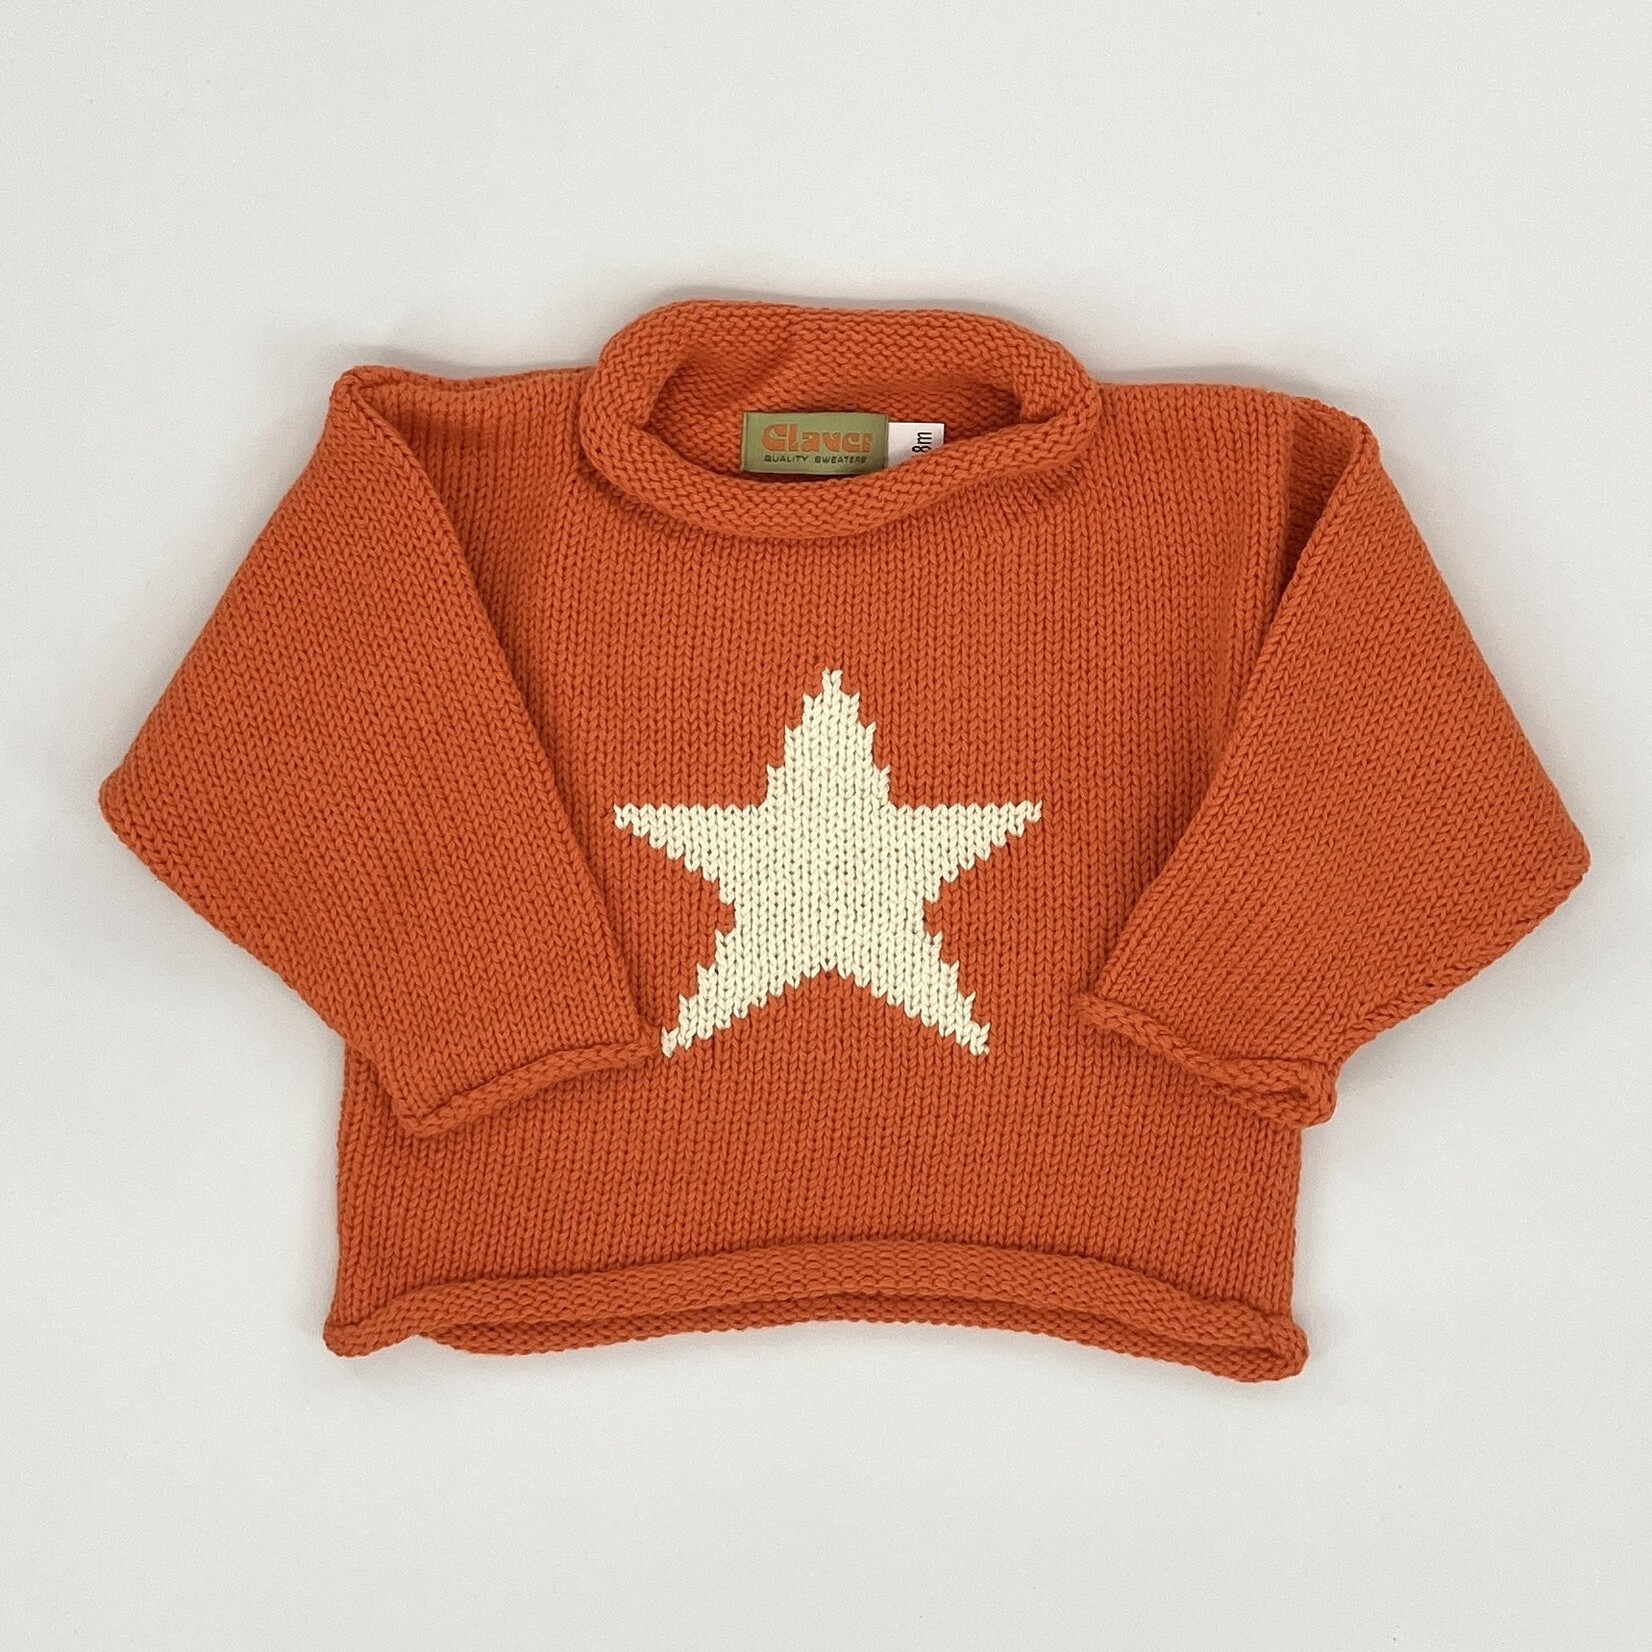 ACVISA/CLAVER Orange Sweater with White Star